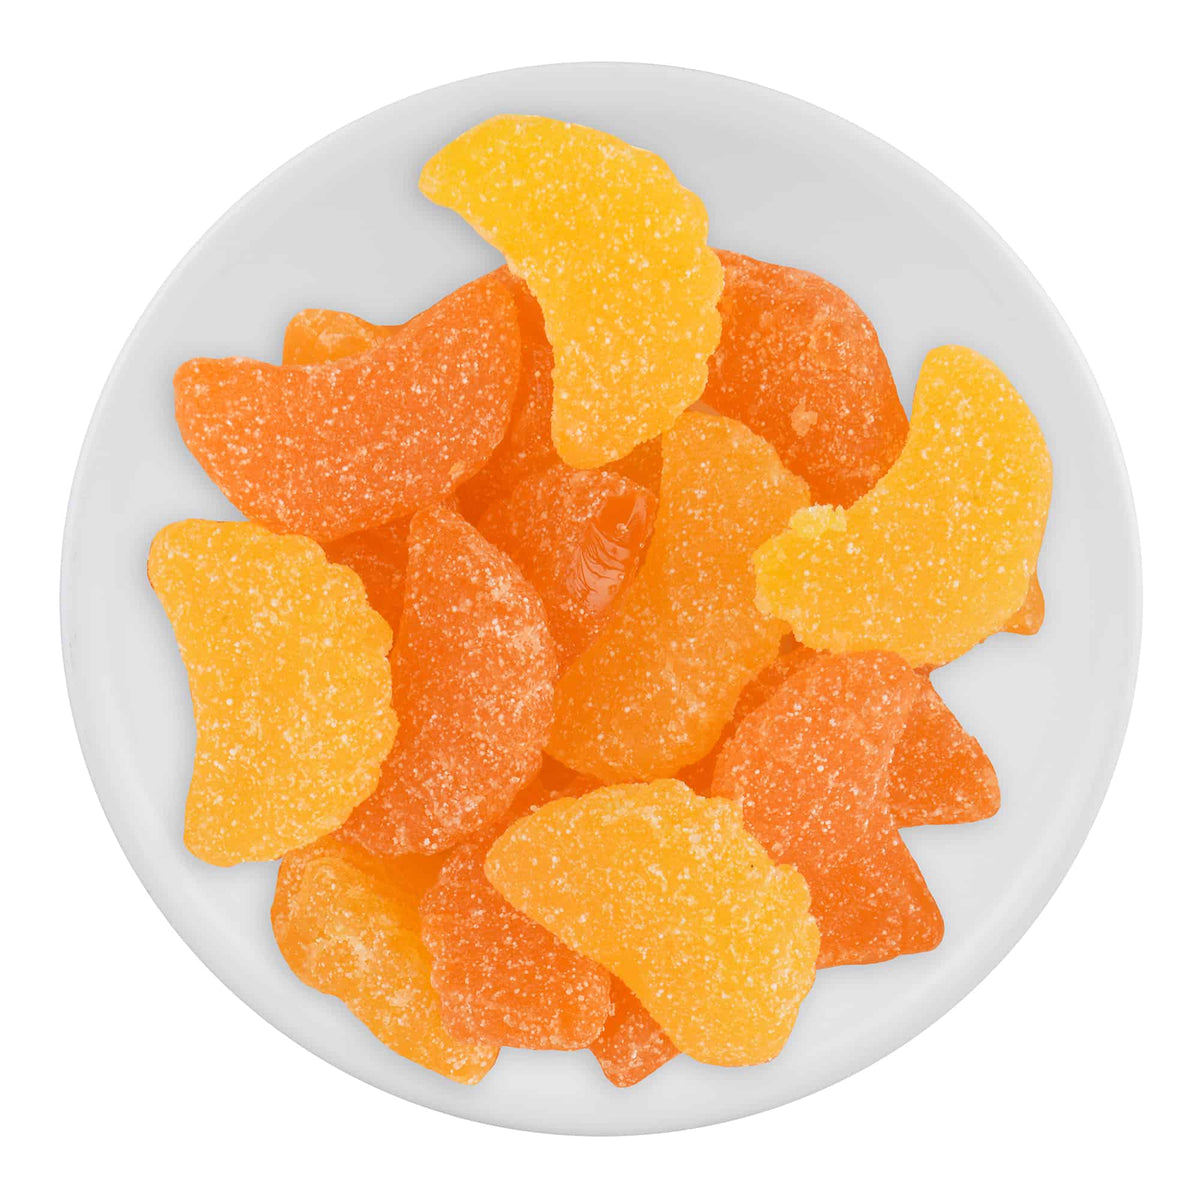 Orange and Lemon Slices Jumbo Pack - 1Kg